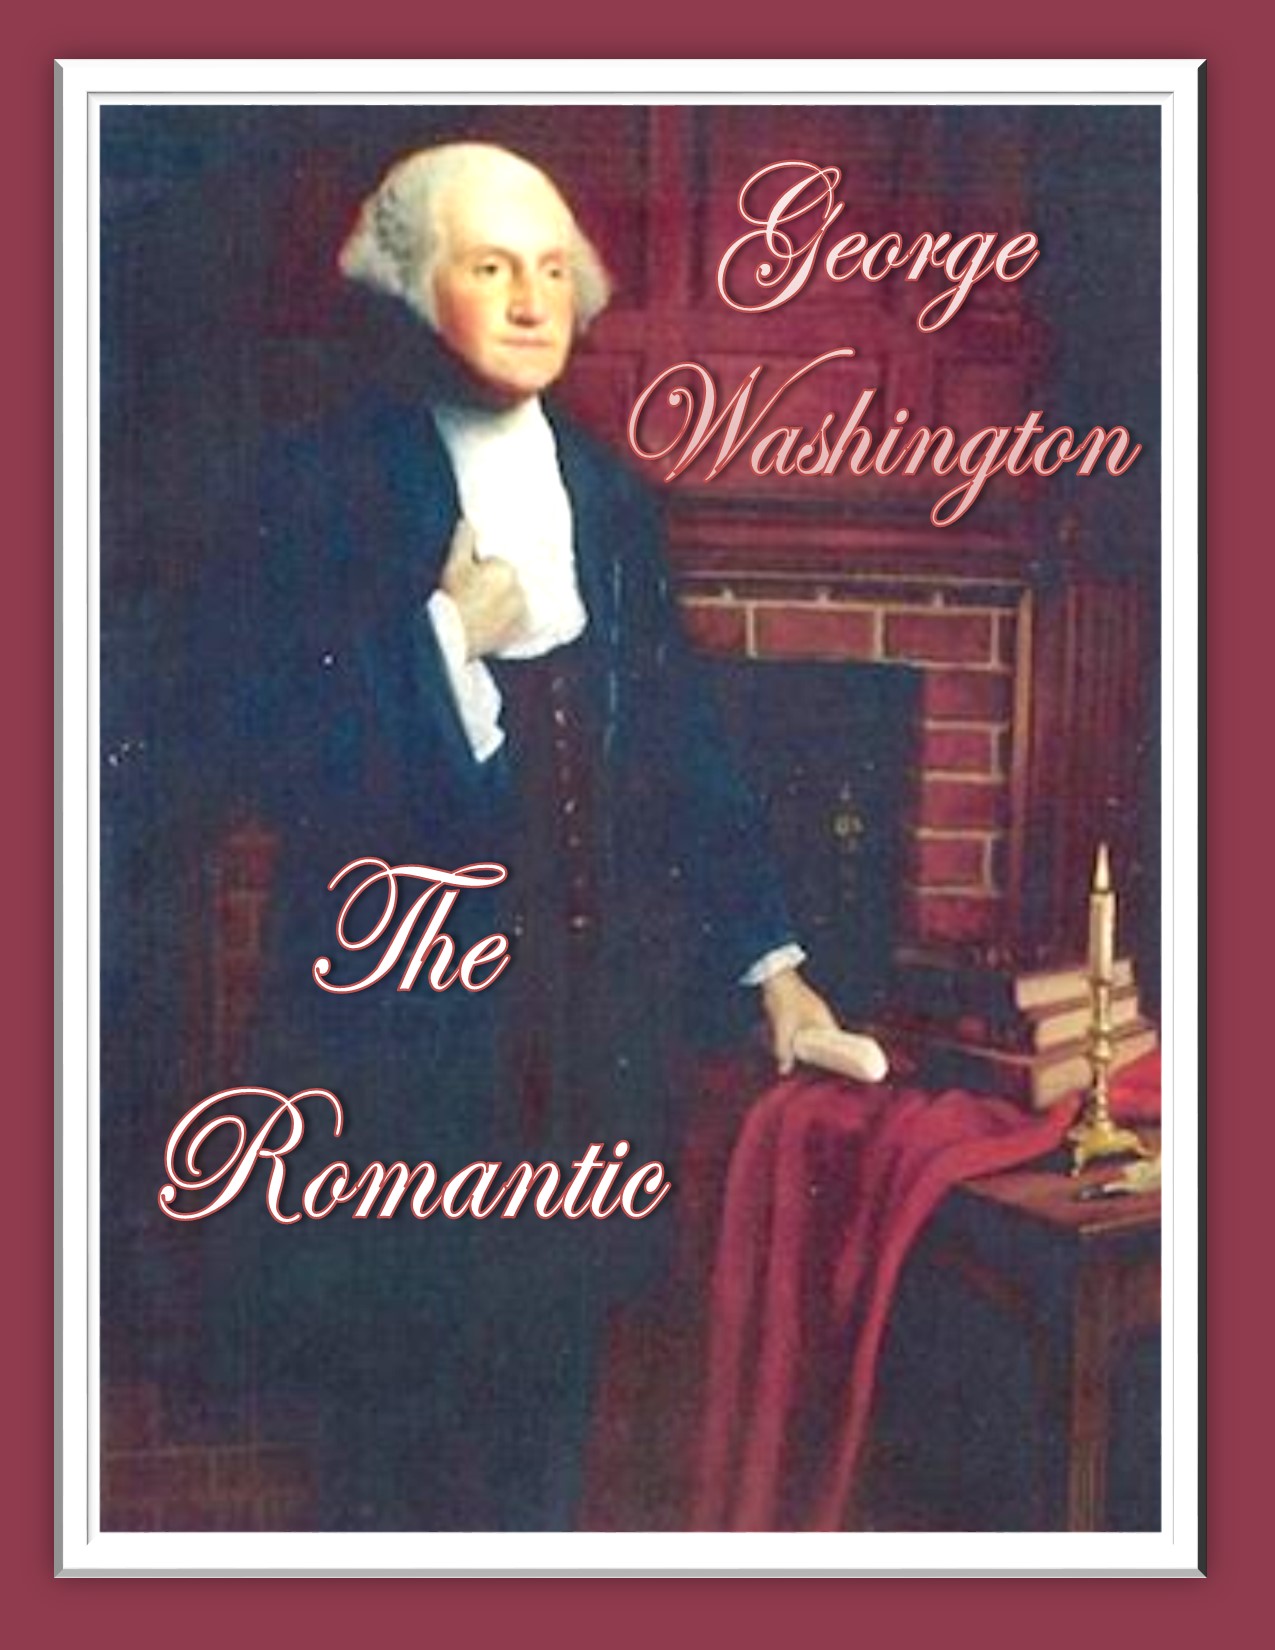 George Washington, The Romantic